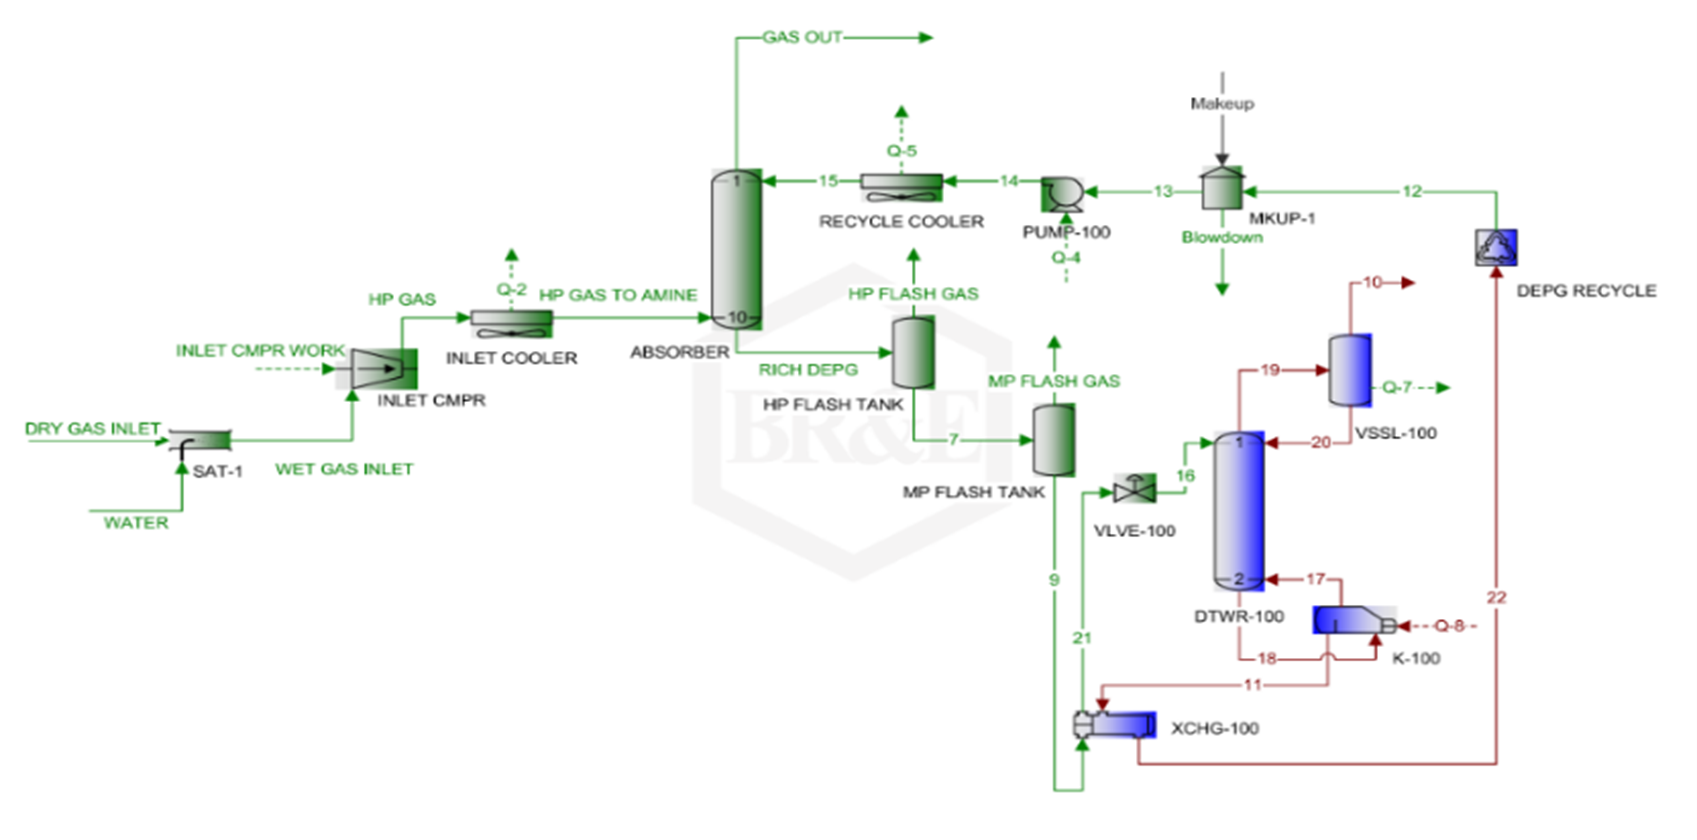 helium-gas-plant-model